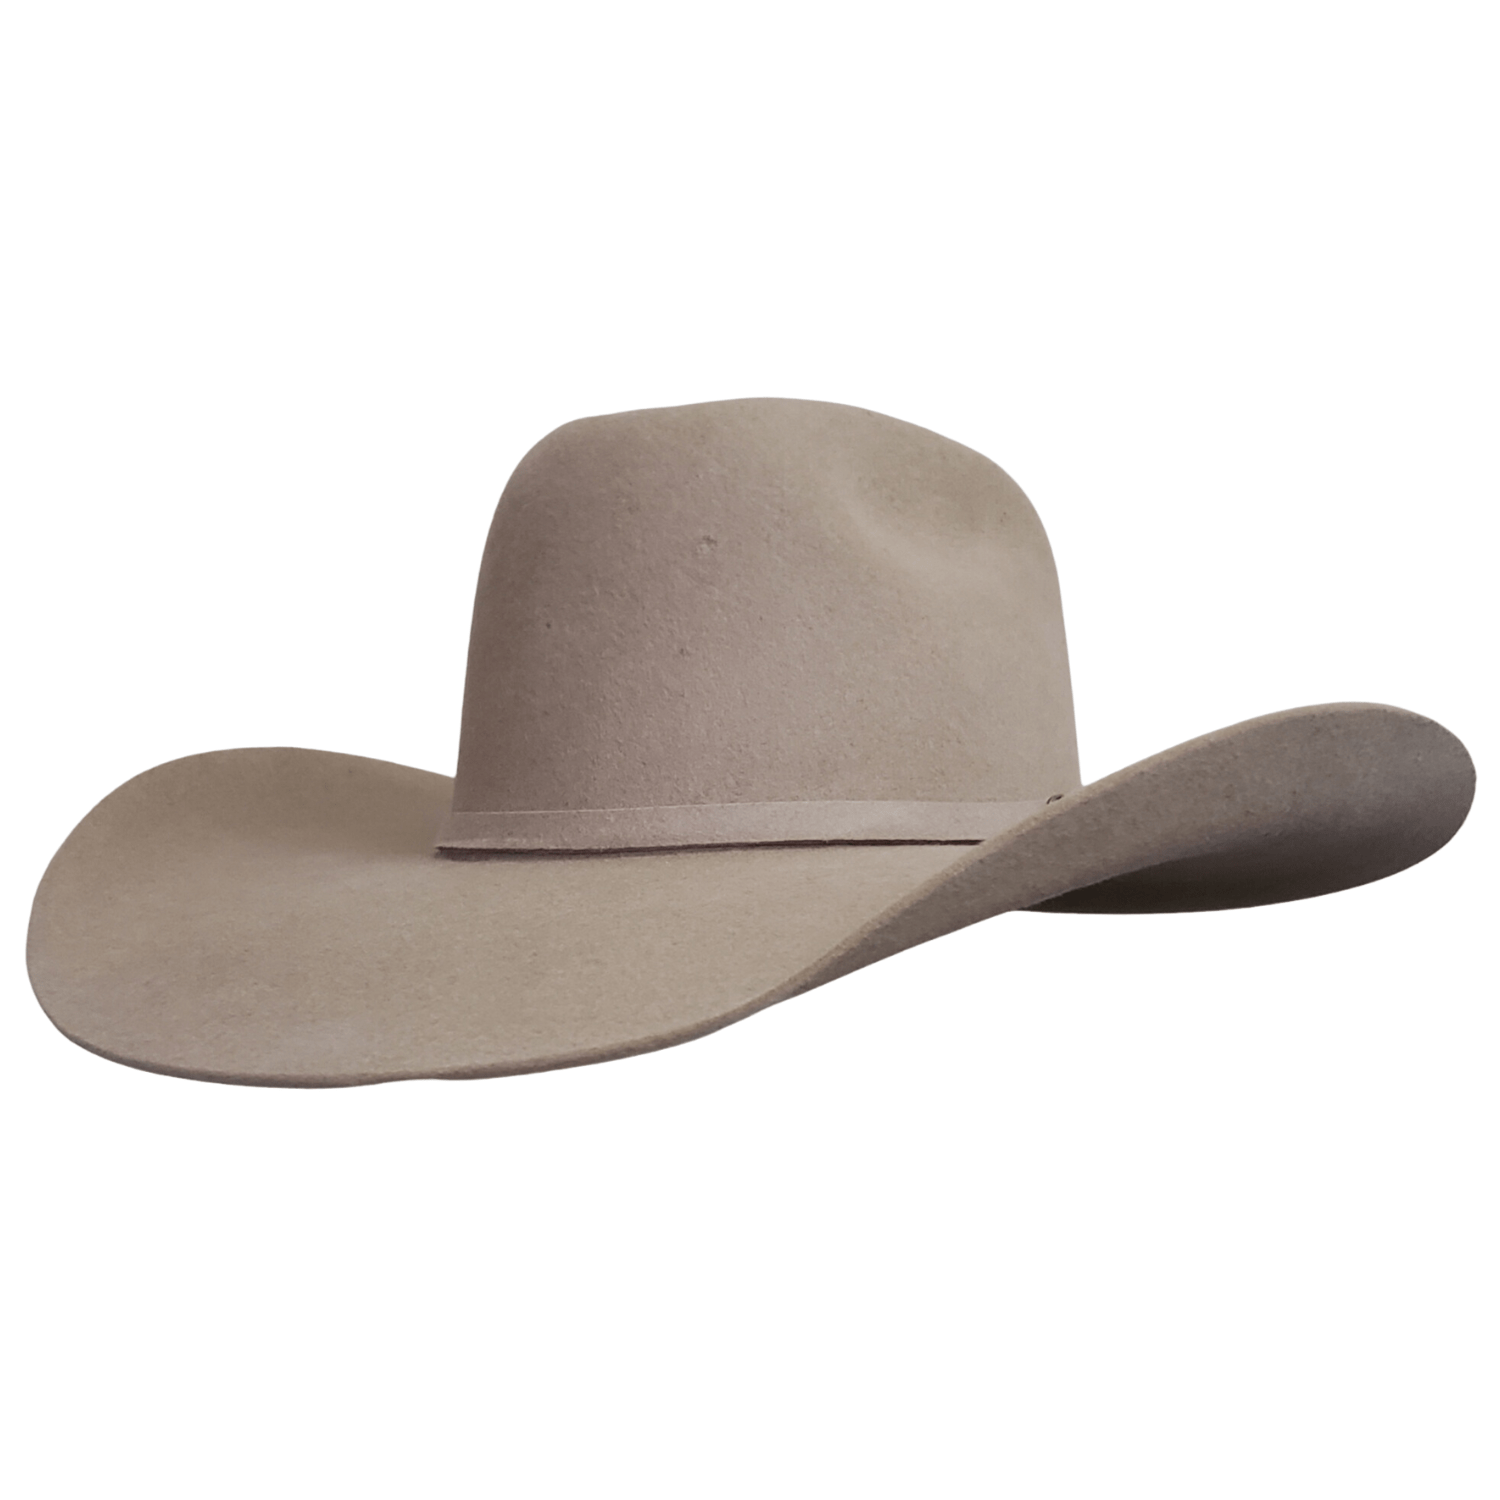 Gone Country Hats Men & Women's Hats Big Sky Chestnut - Wool Cashmere